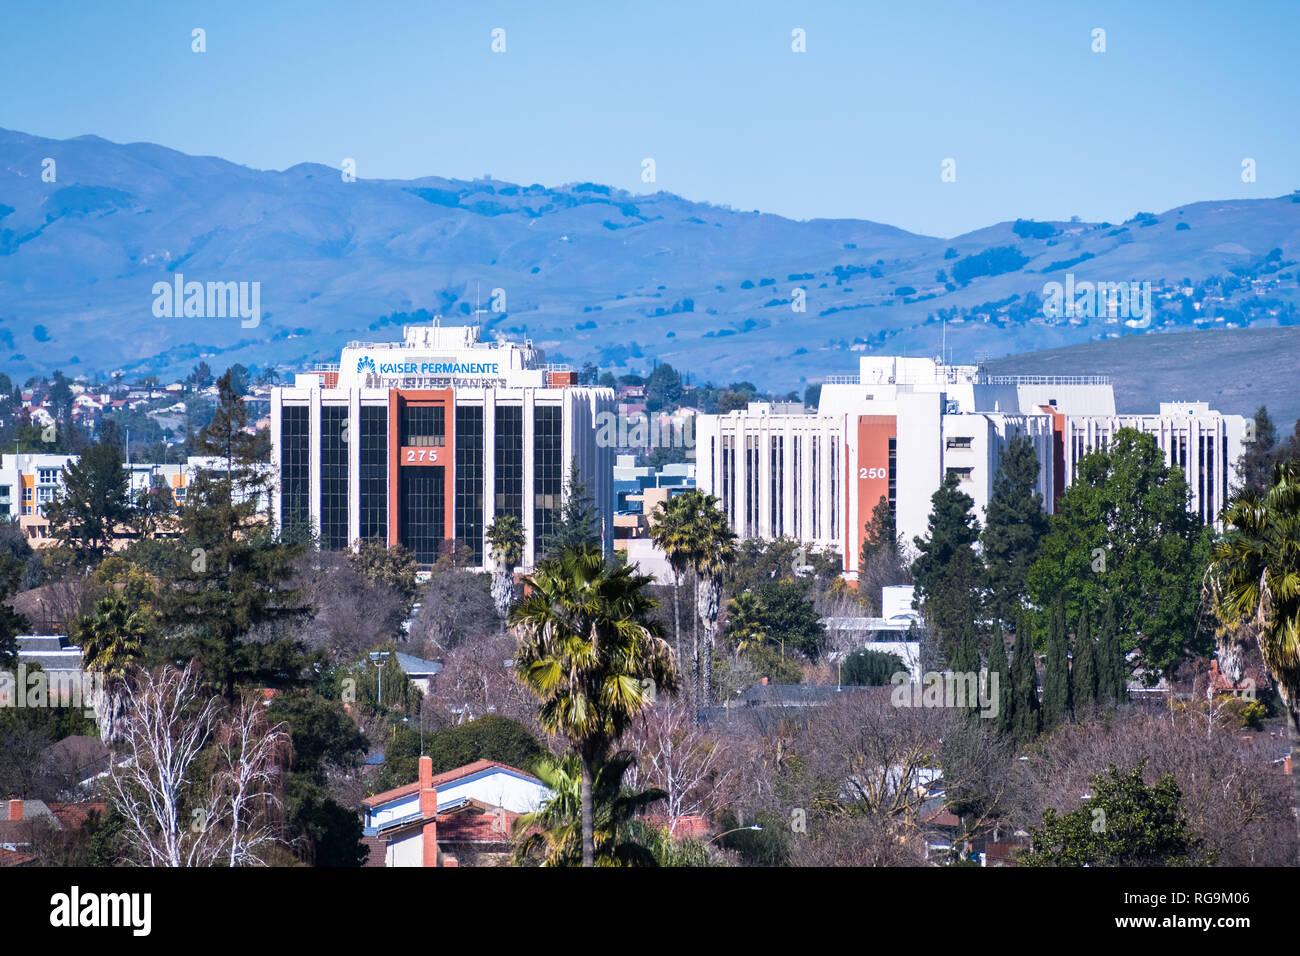 Februar 23, 2018 San Jose/CA/USA - Kaiser Permanente Medical Center und Krankenhaus gebäude in south San Jose, San Francisco Bay Area gelegen Stockfoto